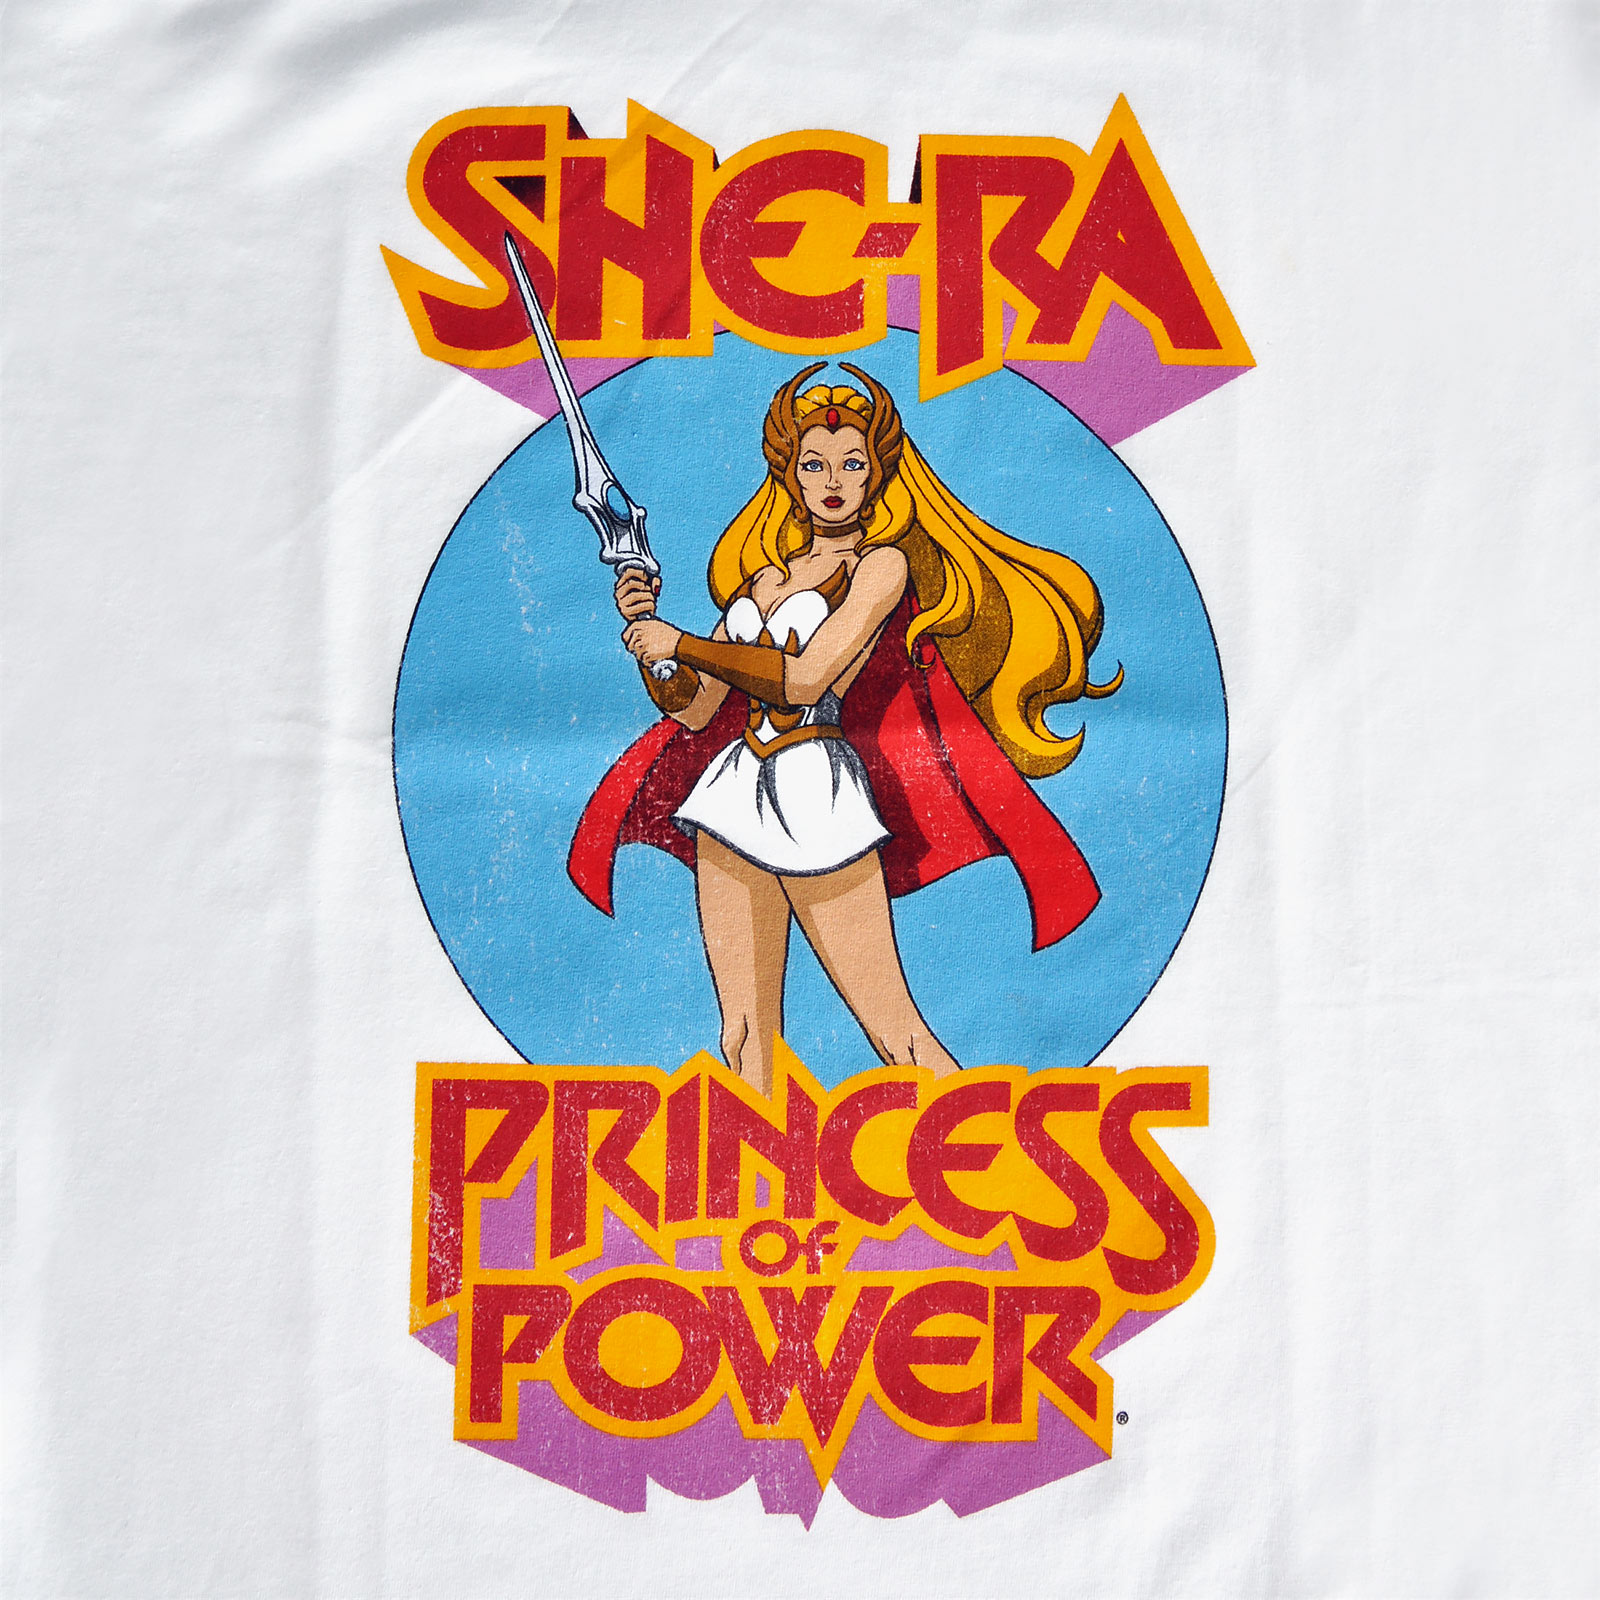 Masters of the Universe - She-Ra Princess of Power T-Shirt Damen weiß